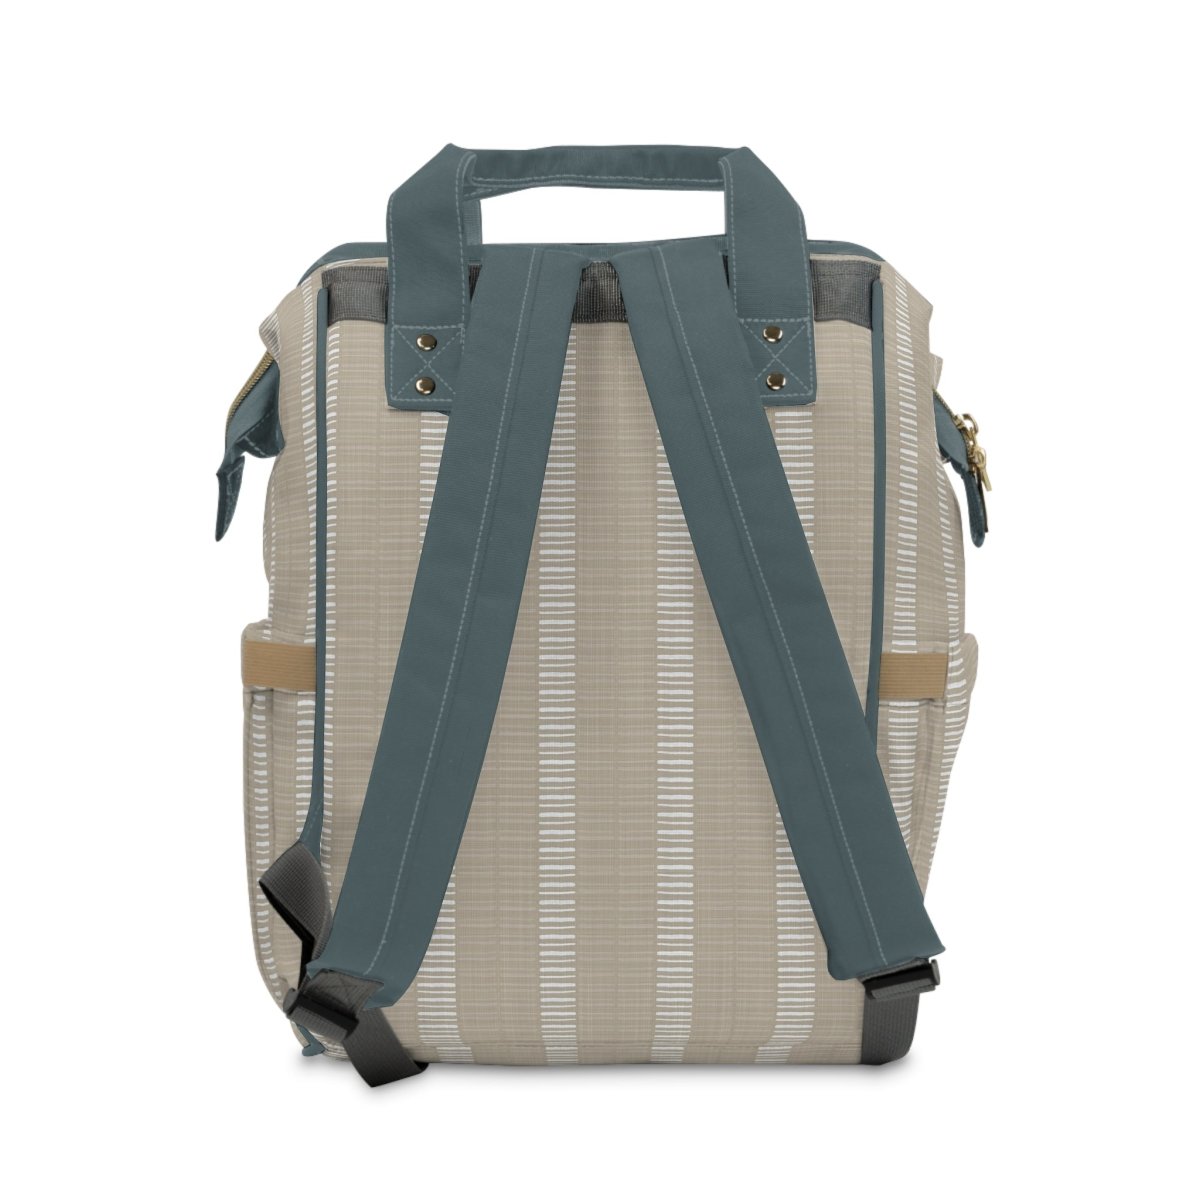 Modern Farmhouse Personalized Backpack Diaper Bag - Diaper Bag